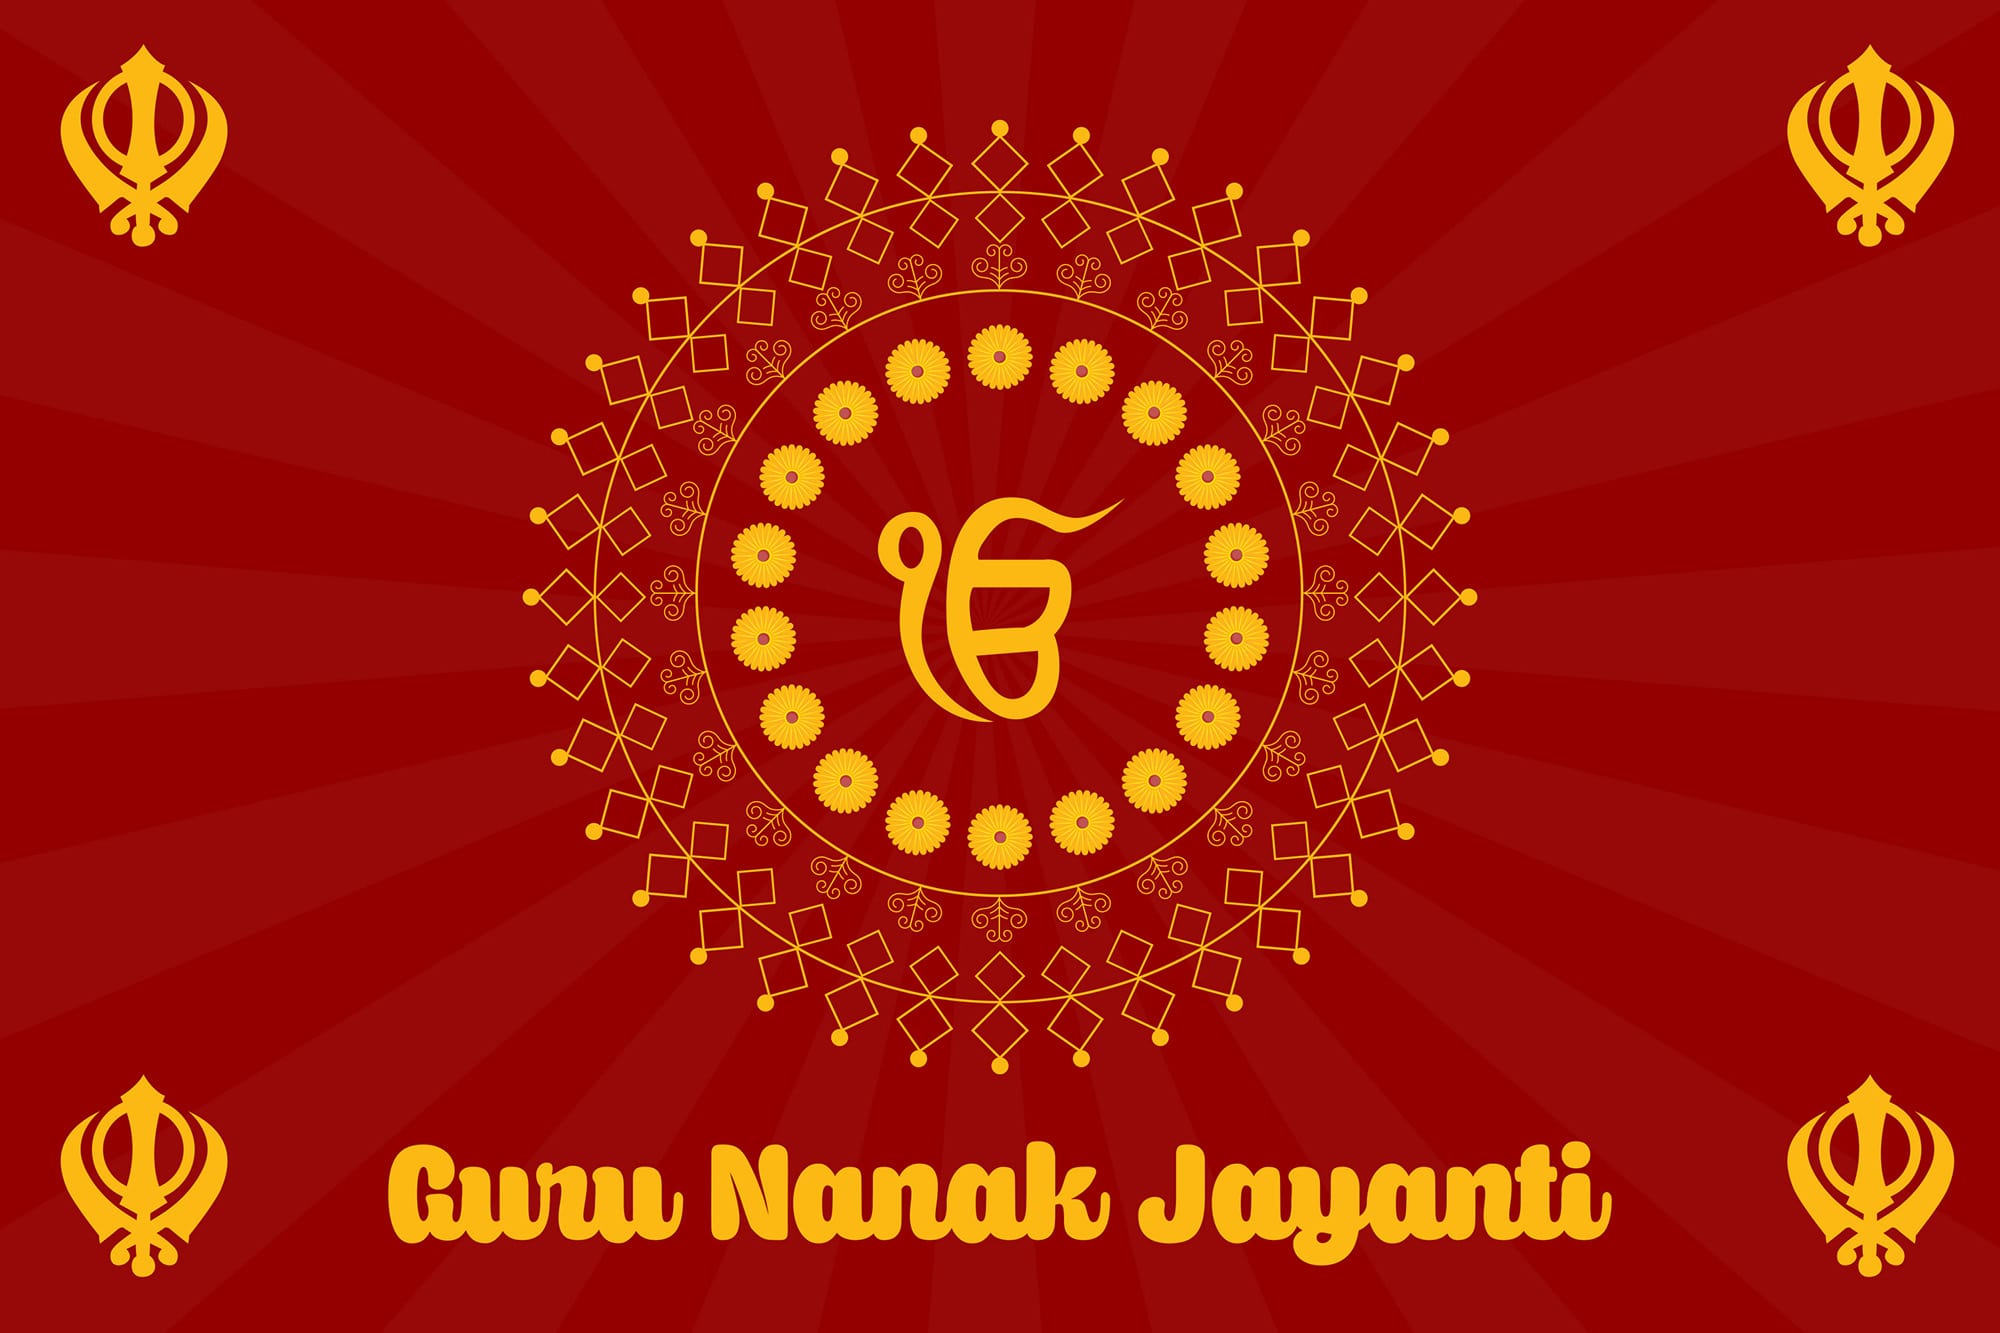 Creative Guru Nanak Jayanti festival free vector illustration design with traditional patterns and symbols